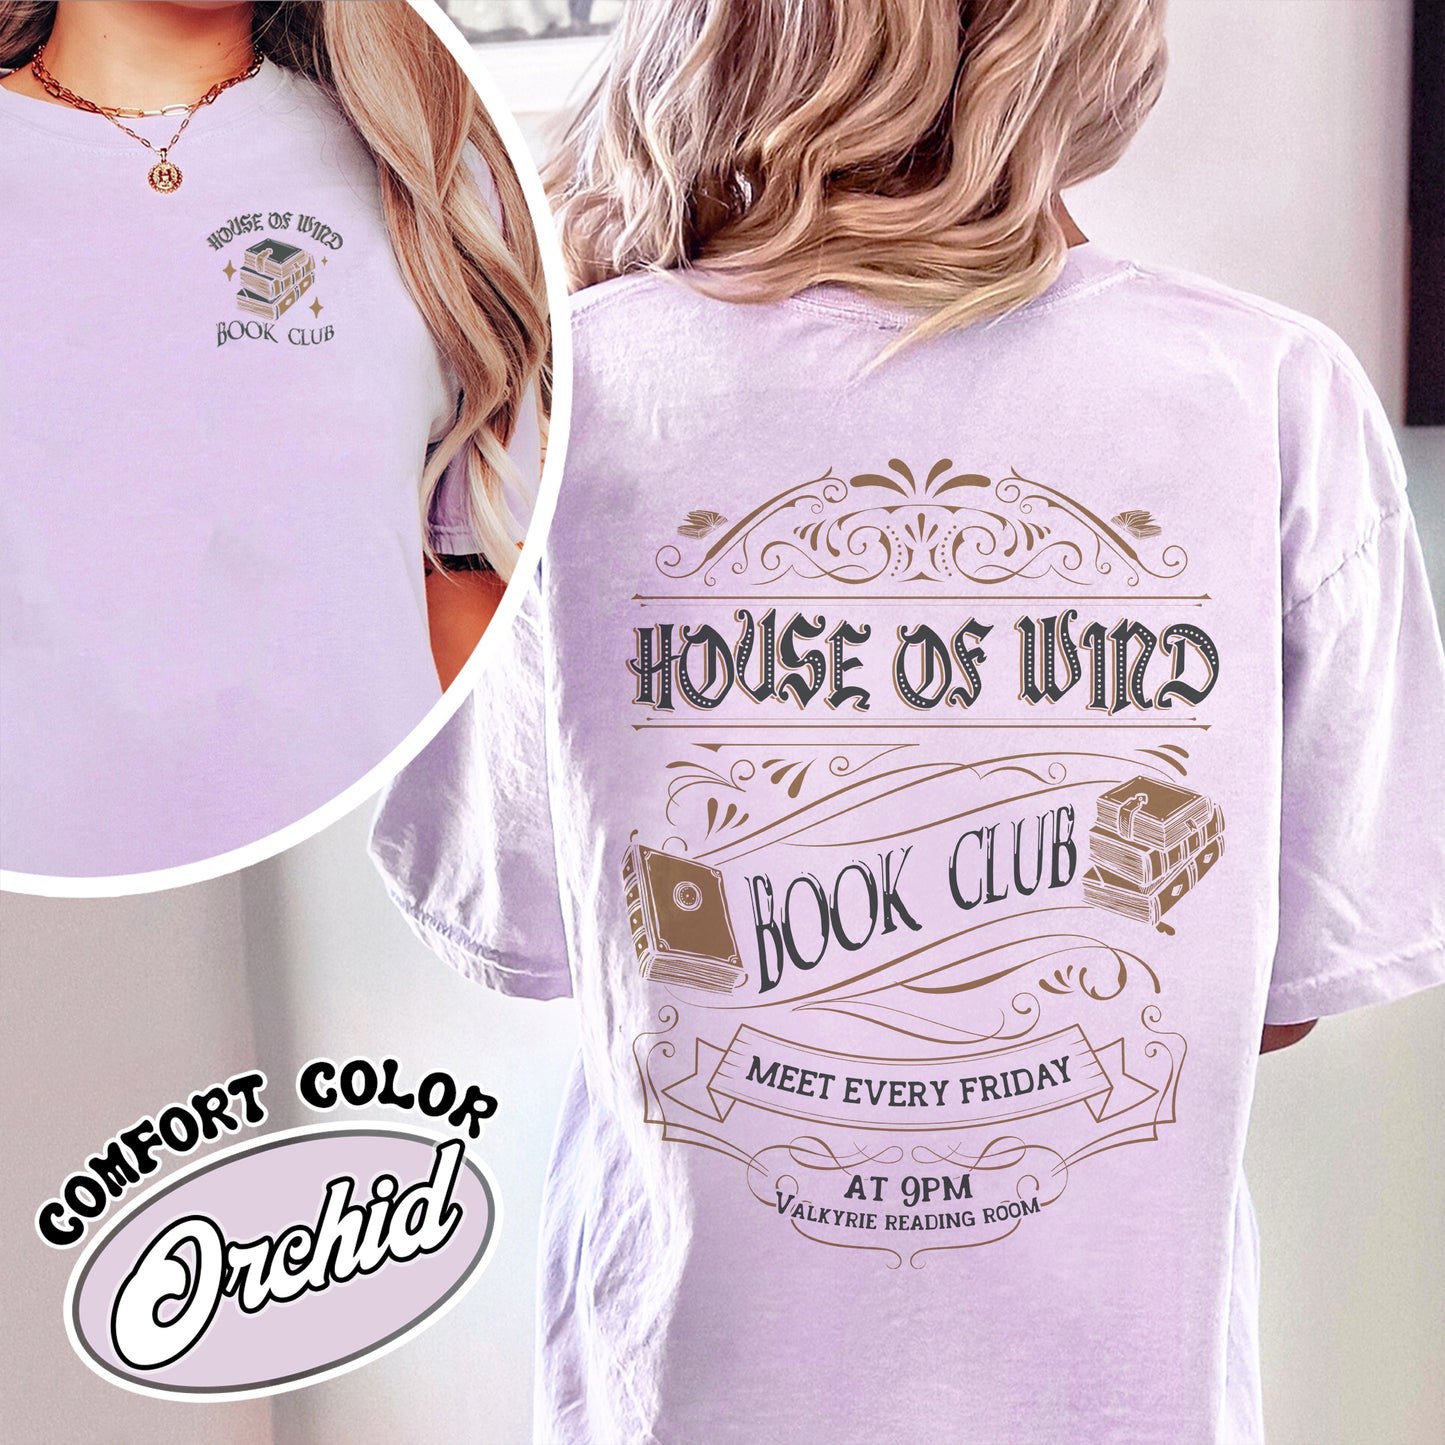 House Of Wind Book Club Comfort Color Shirt, Acotar Velaris Starlight Shirt